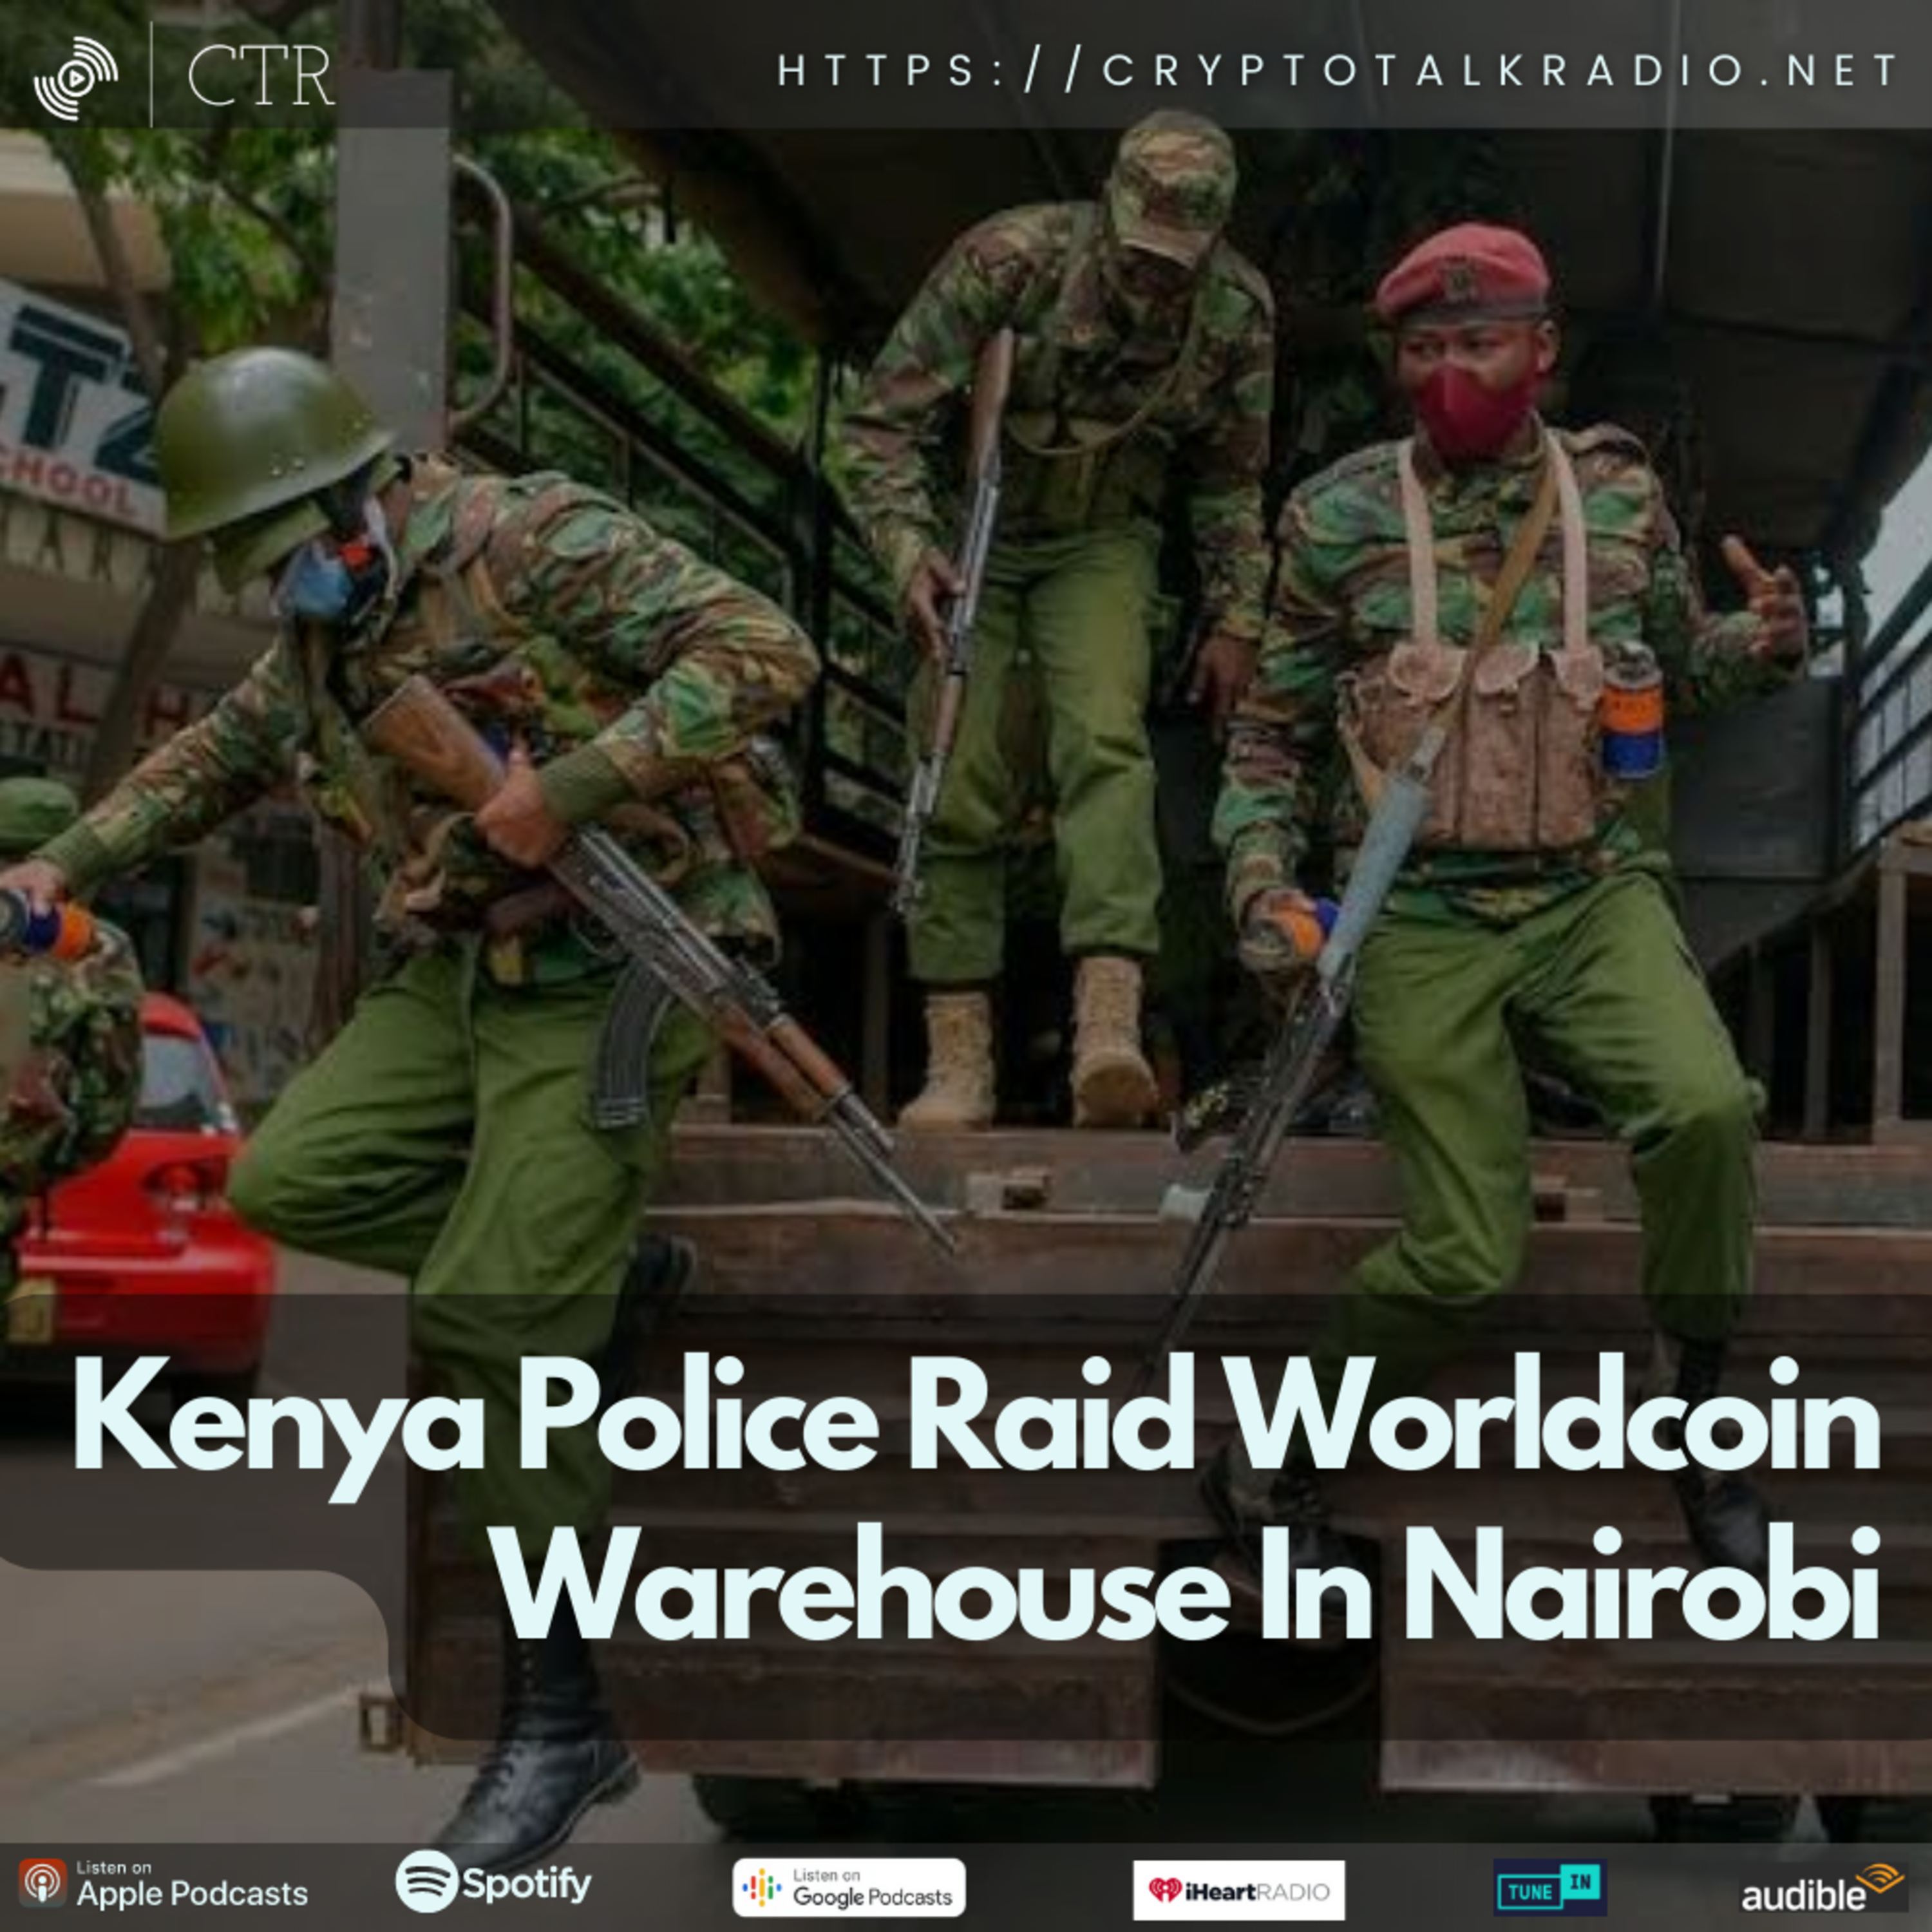 Kenya Police Raid #Worldcoin Warehouse In Nairobi